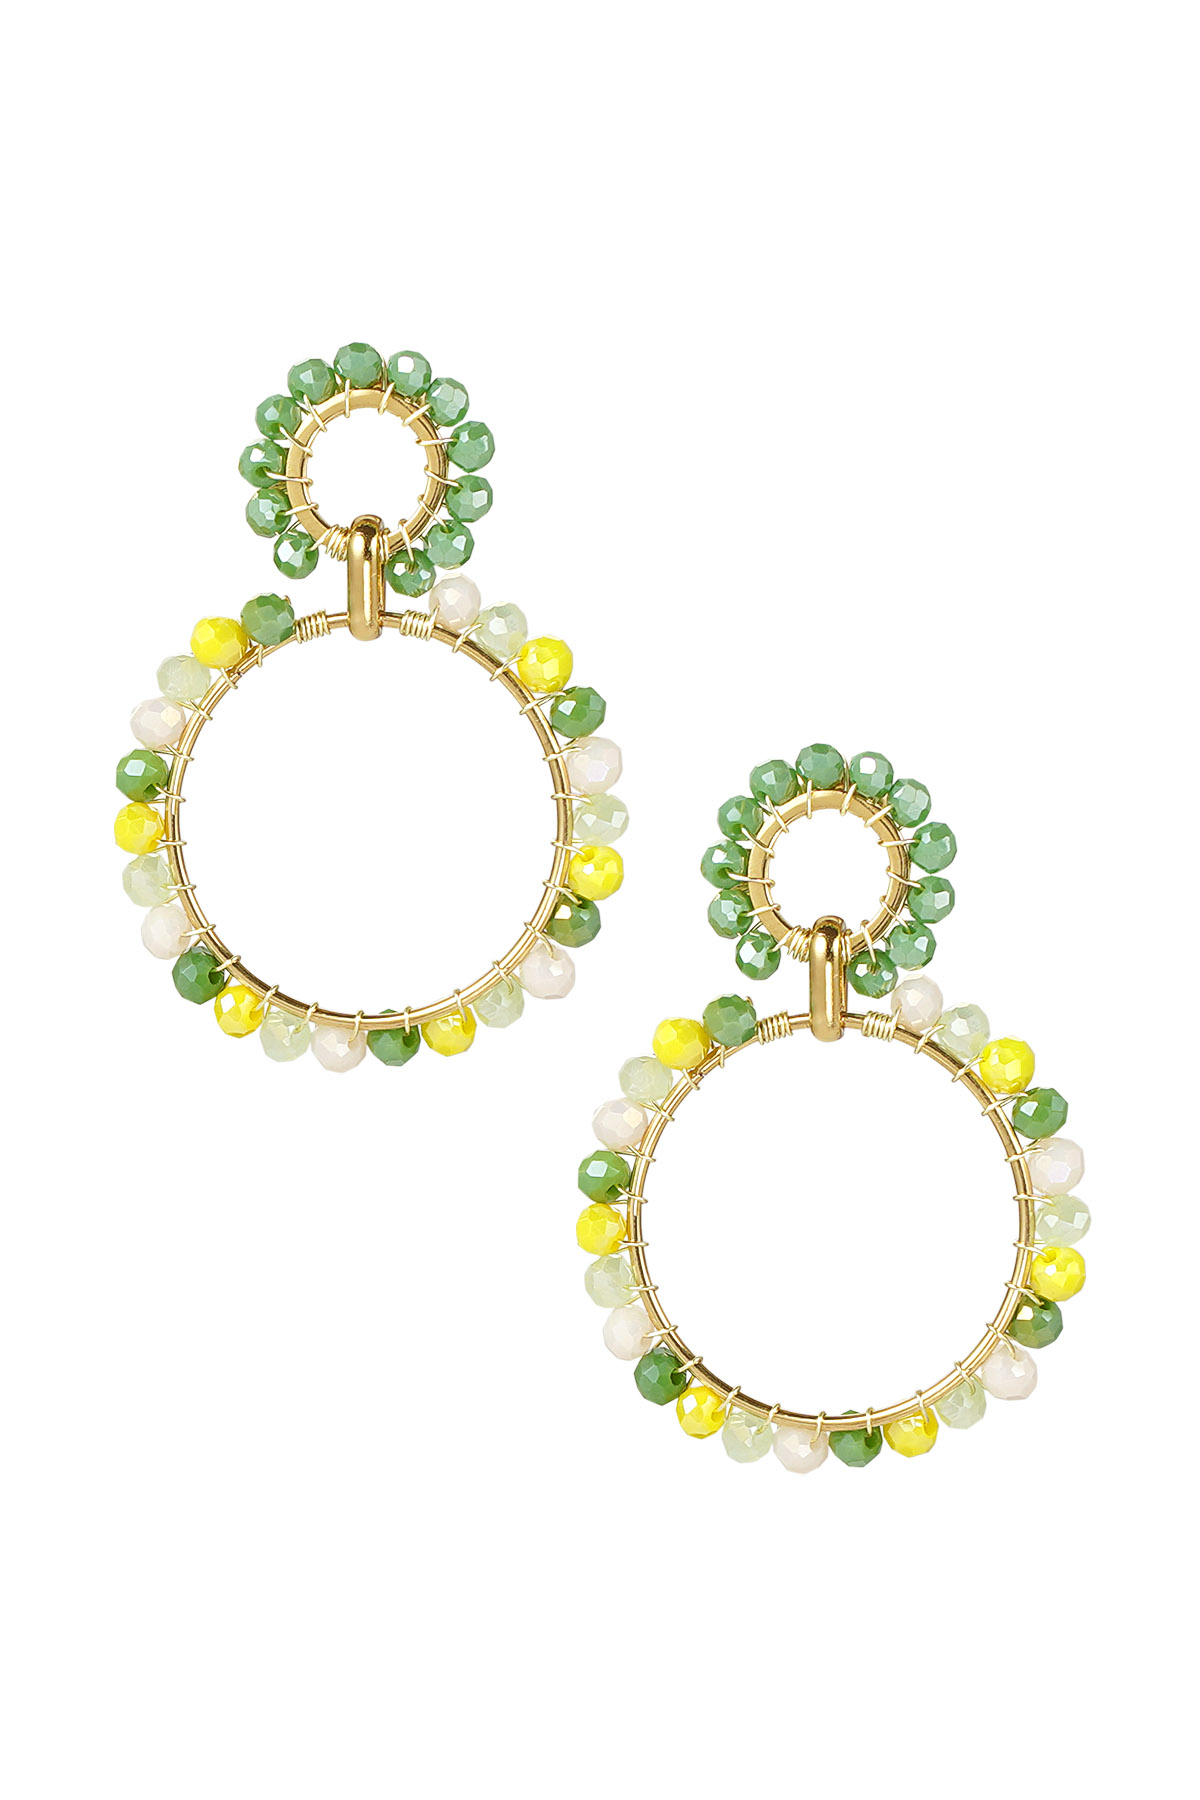 Ohrringe Perlenparty - grün/gelb h5 